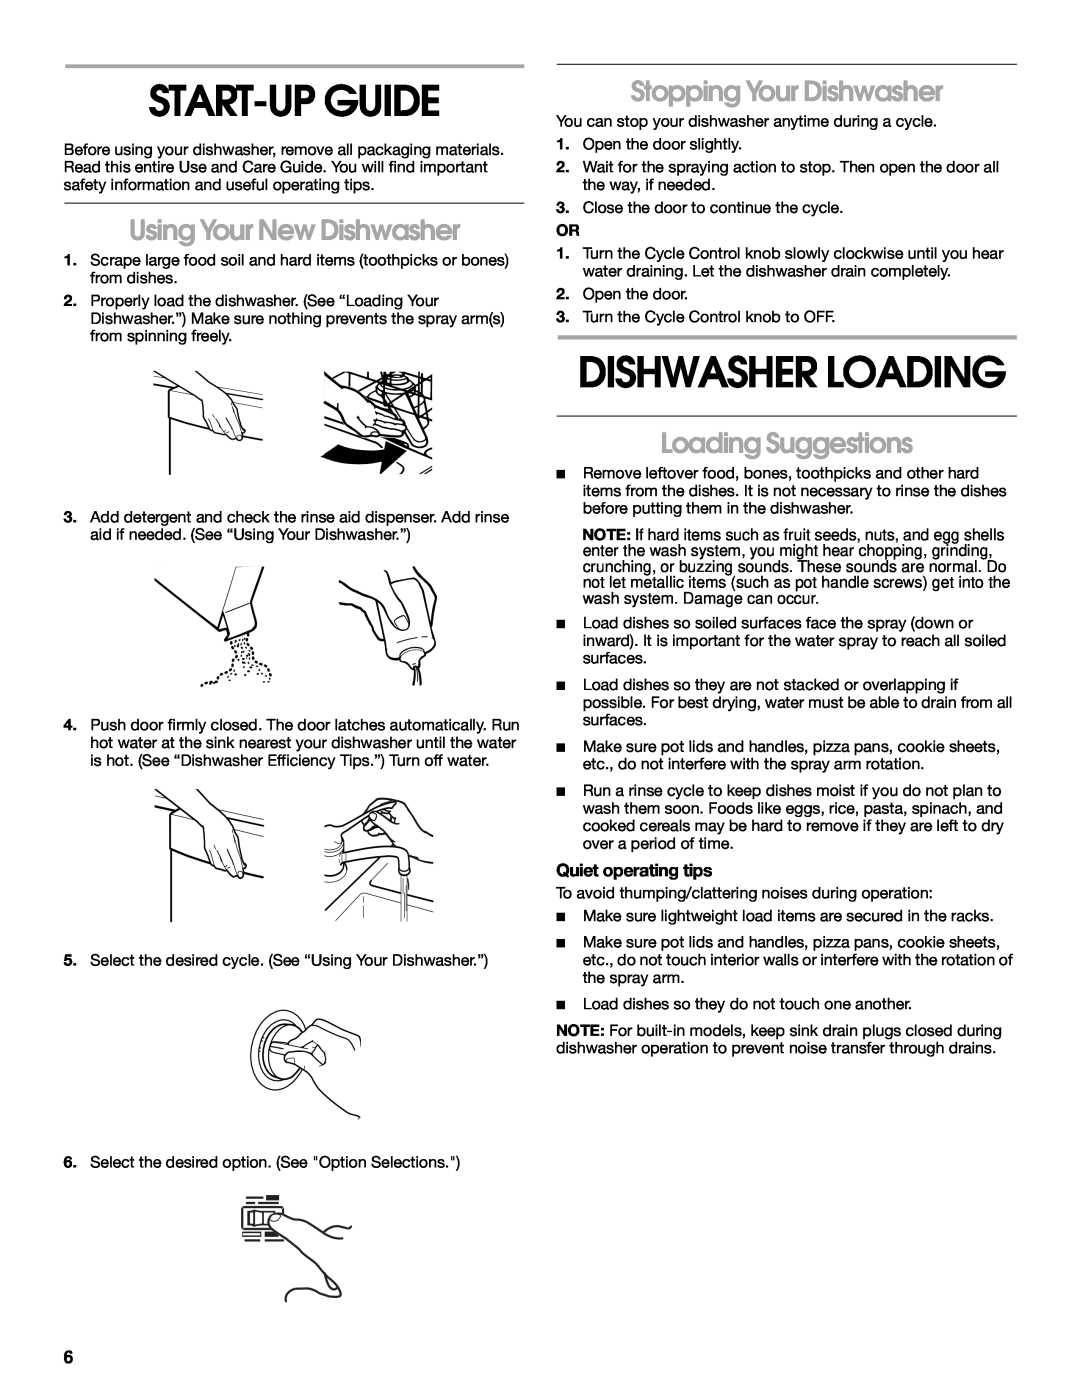 Crosley CUD4000 manual Start-Upguide, Dishwasher Loading, Using Your New Dishwasher, Stopping Your Dishwasher 